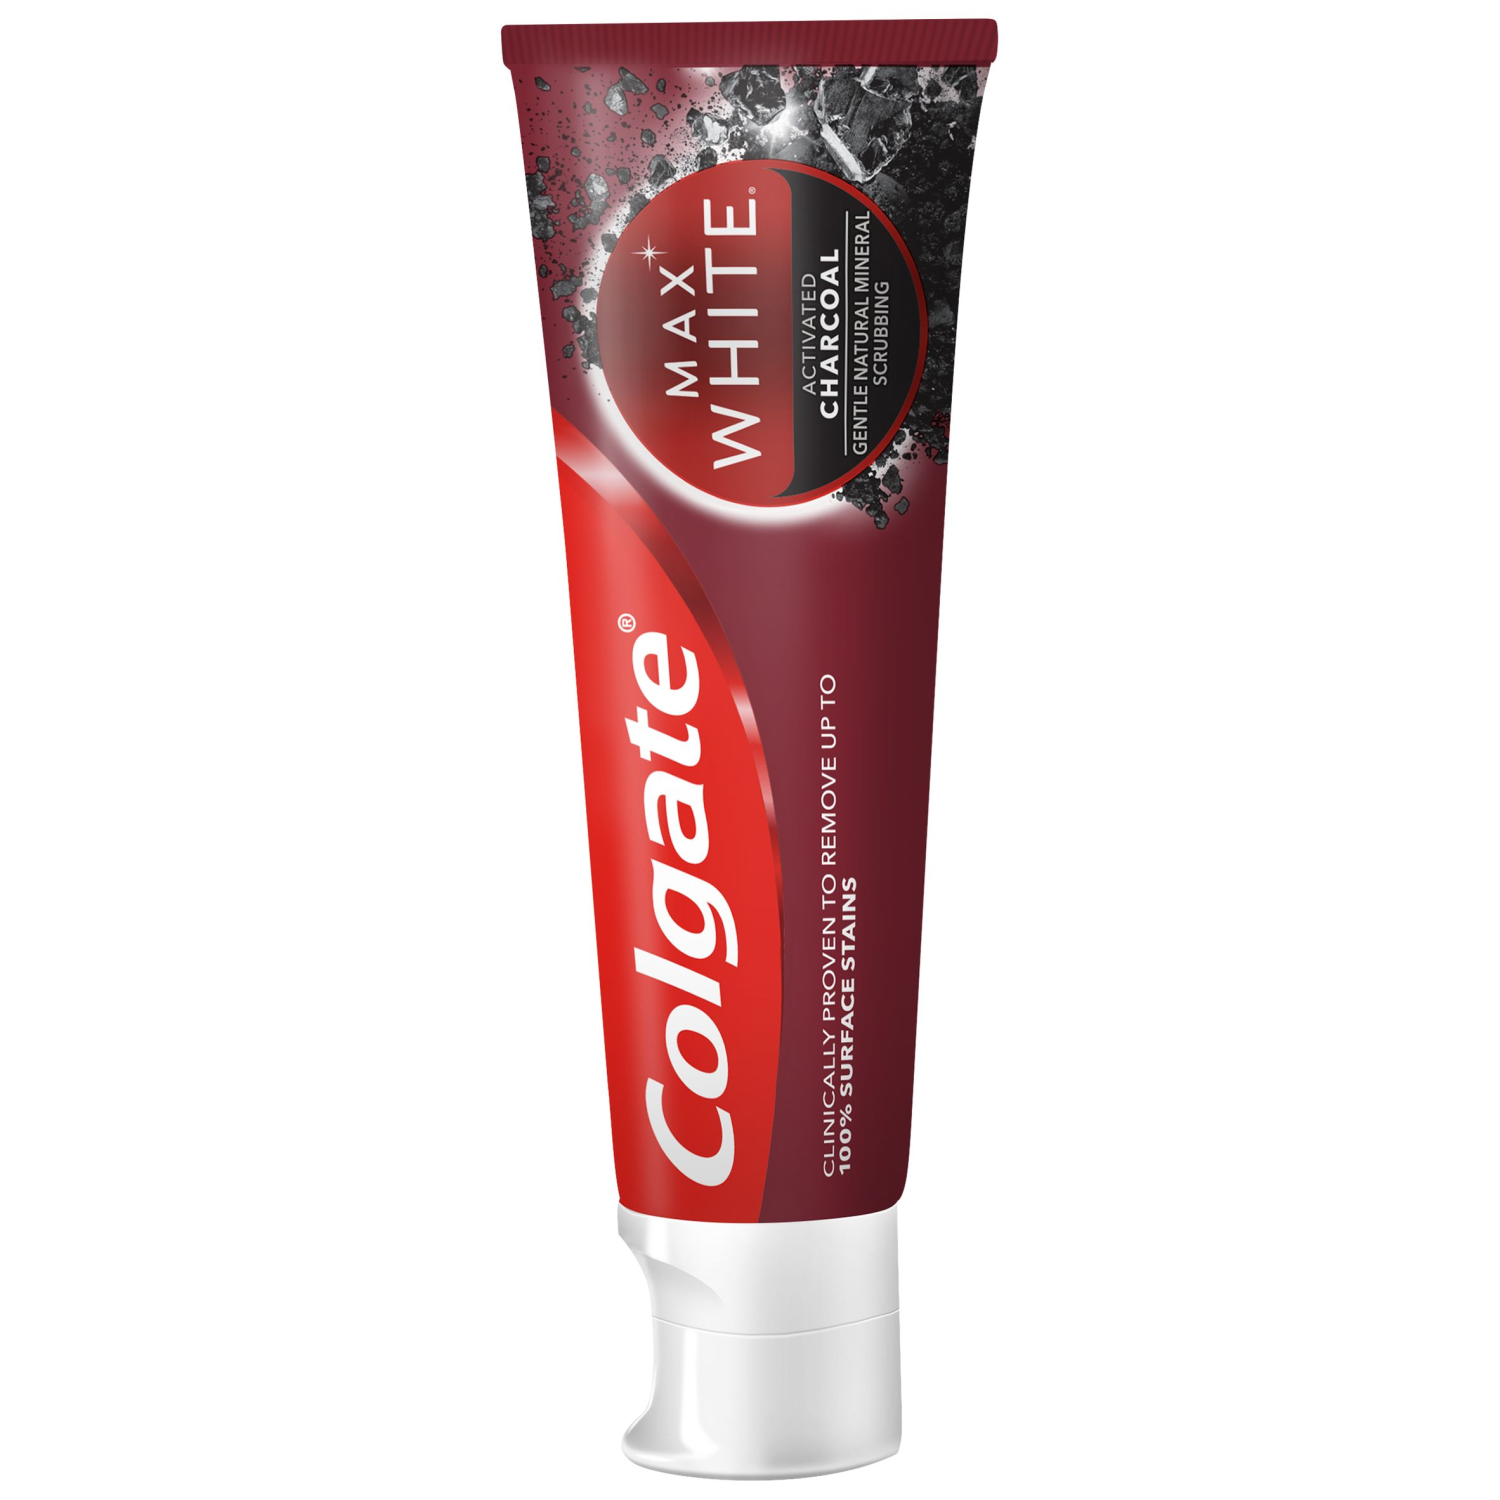 Colgate Max White Charcoal отбеливающая зубная паста с активированным углем, 75 мл georganics натуральная отбеливающая зубная паста с активированным углем 60 мл